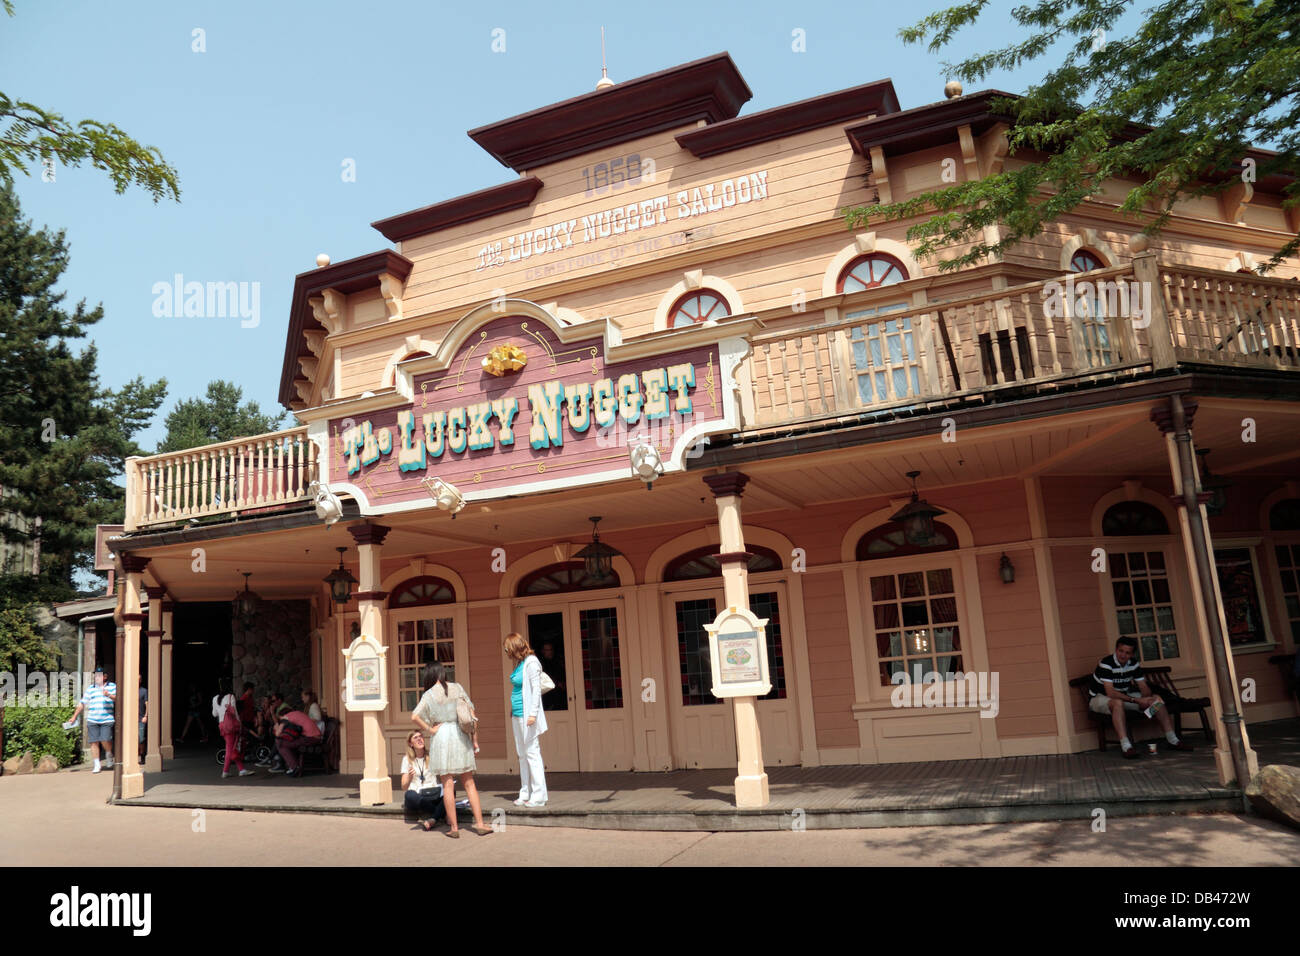 The Lucky Nugget Saloon restaurant in Disneyland Paris, Marne-la-Vallée, near Paris, France. Stock Photo